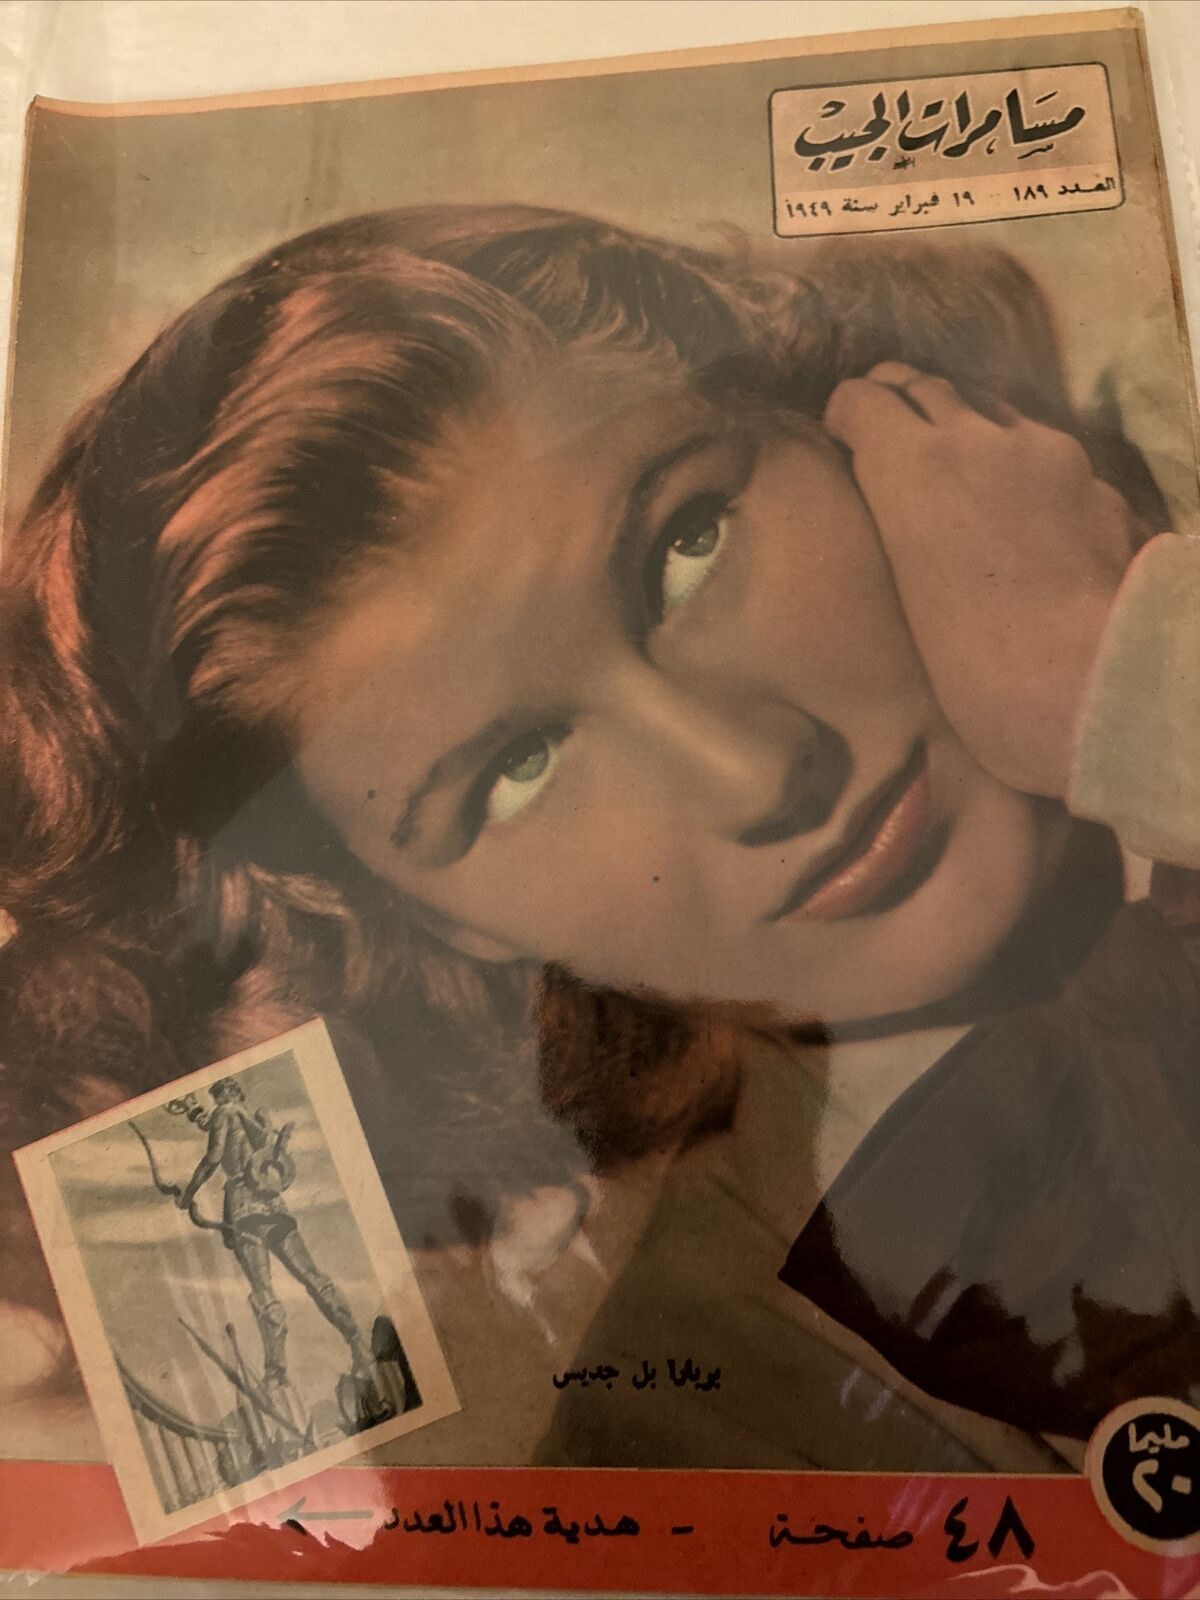 1947 Arabic Magazine Actress Barbara Bel Geddes Cover Scarce Hollywood